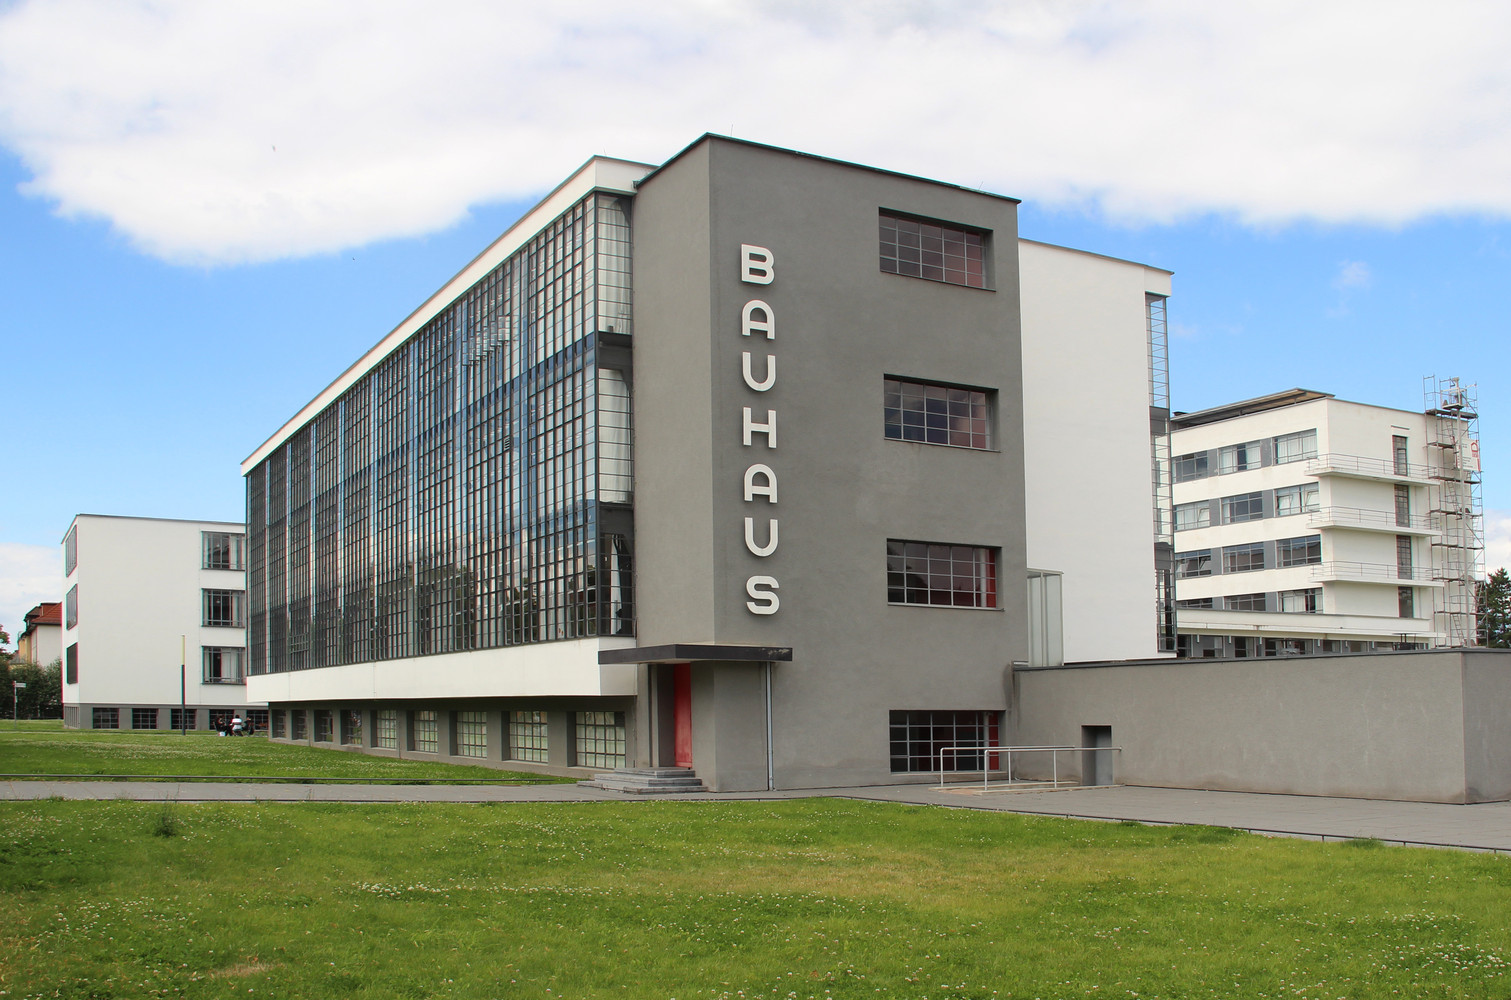 Dessau Bauhaus building designed by Walter Gropius